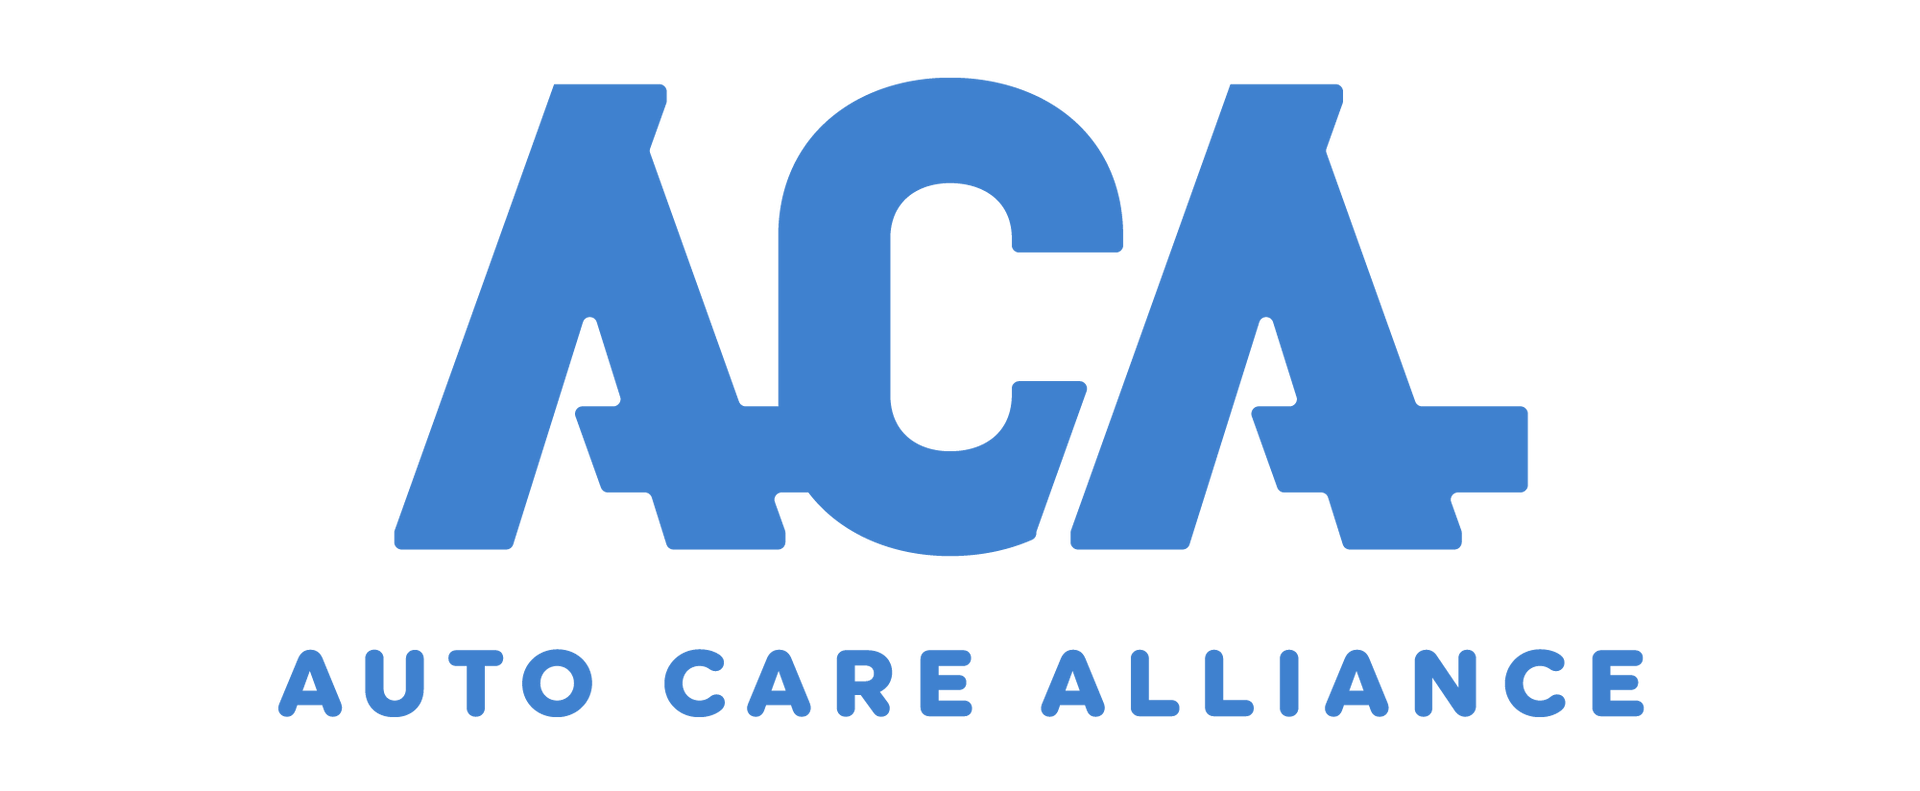 Aca auto care alliance logo on a white background